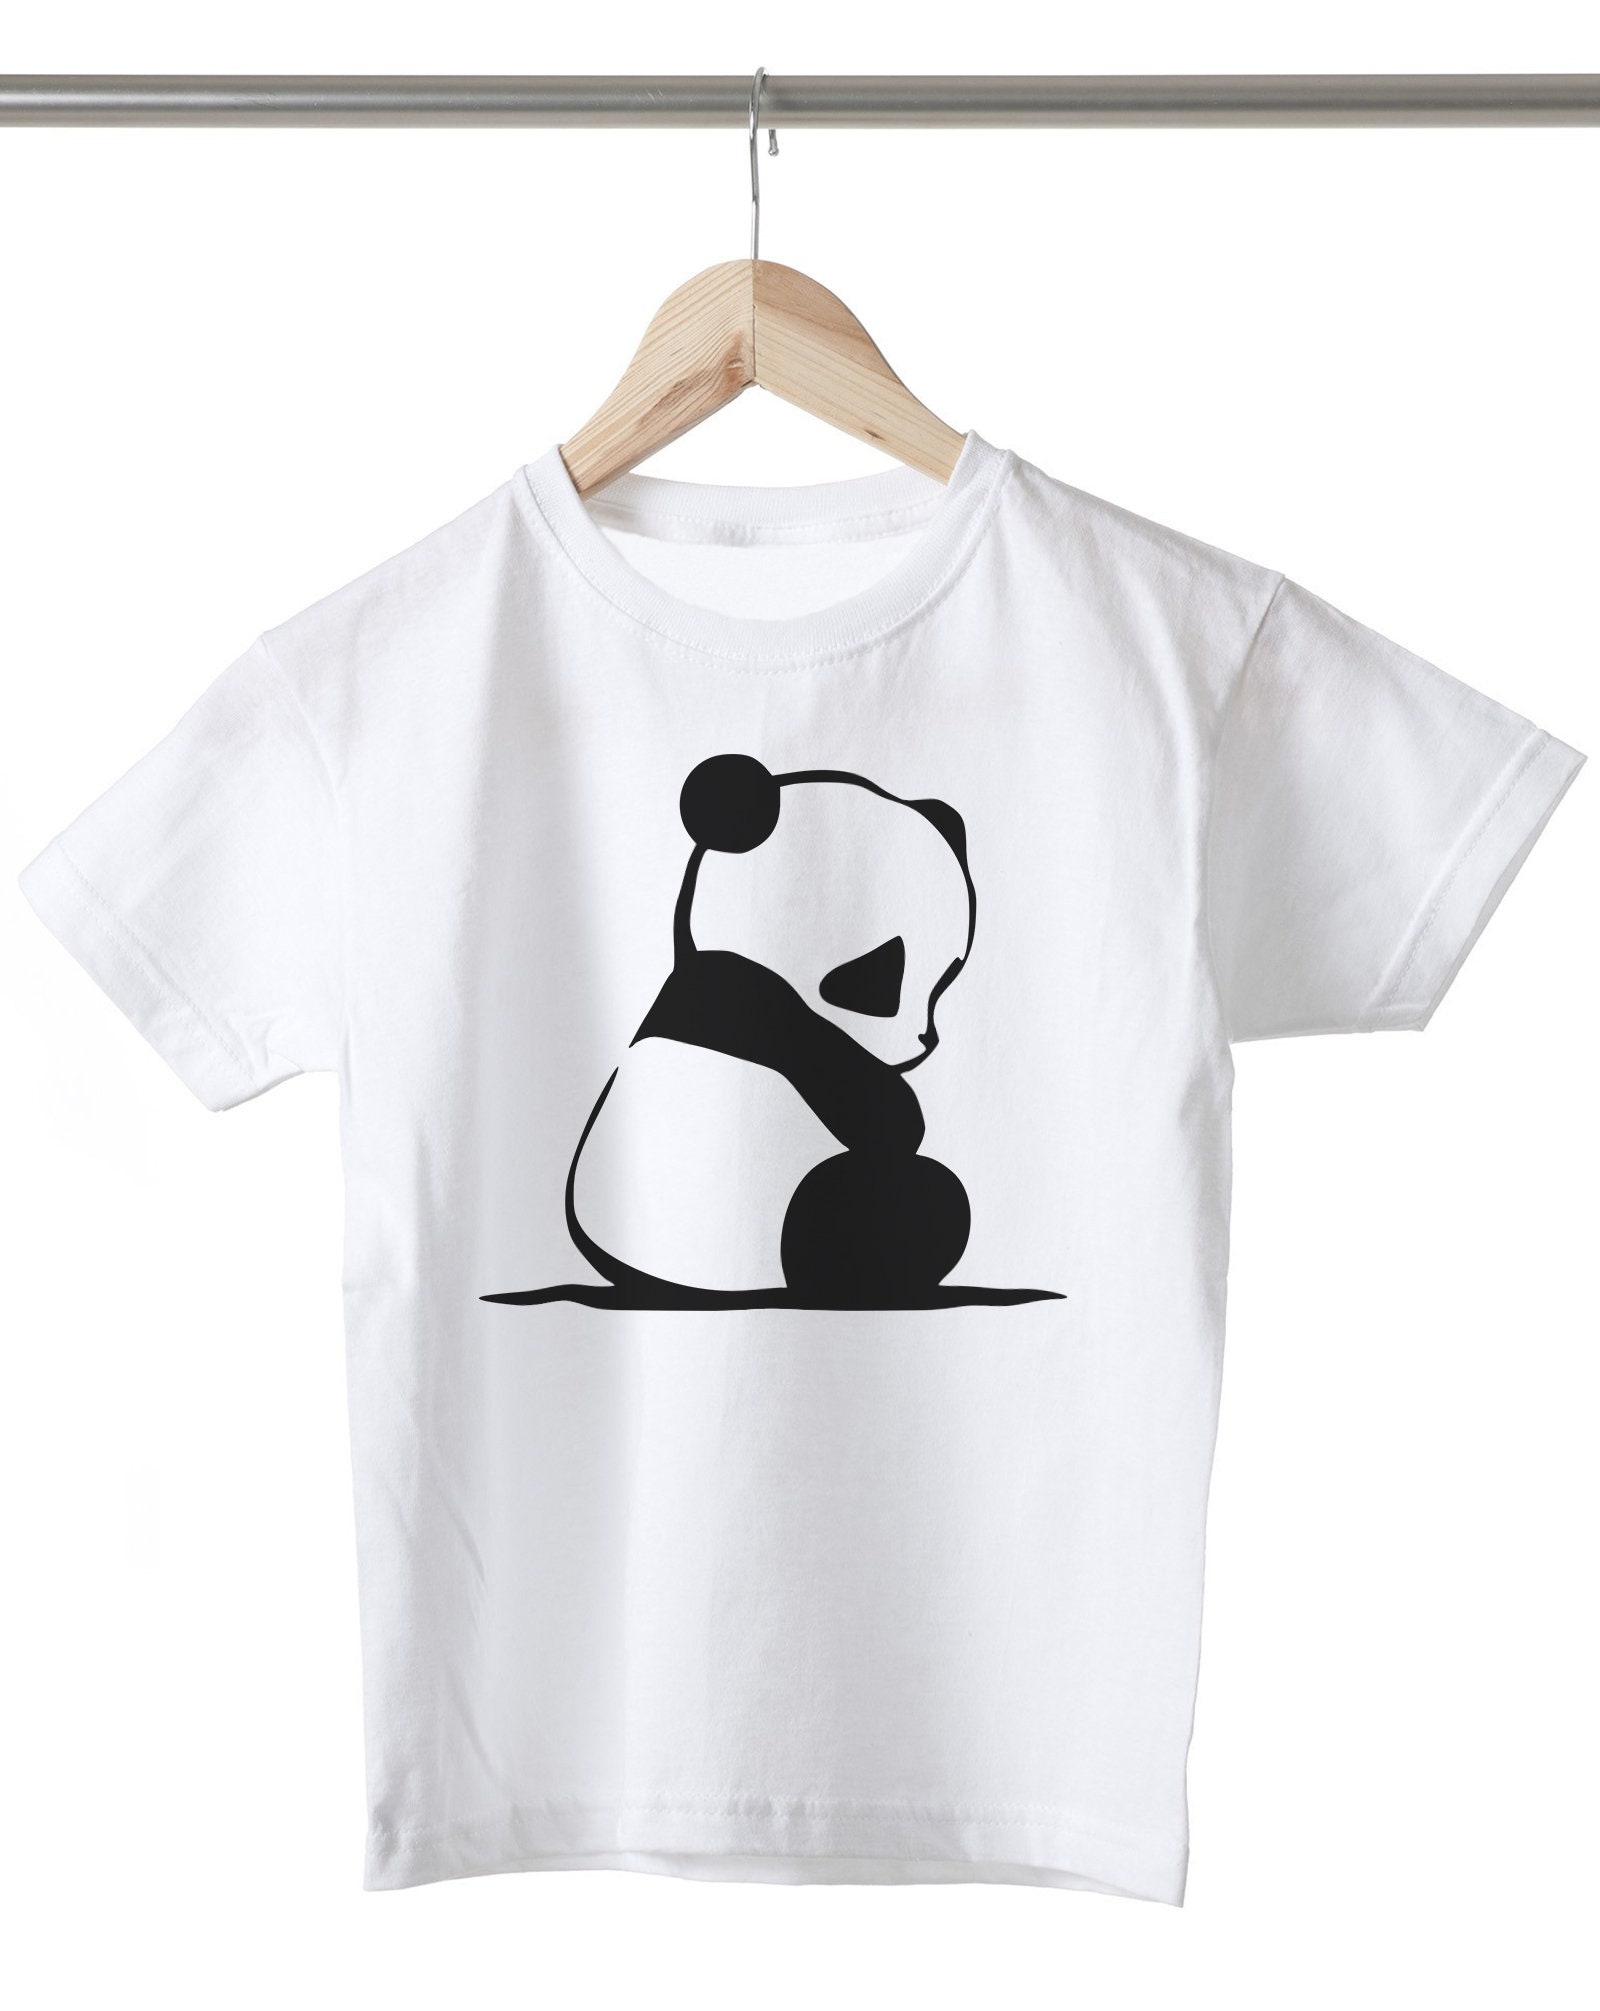 White Tee Top Unisex Nature - Cartoon Cute Boys Printed Trendy Etsy Girls T-shirt Kids Stencil Cotton Animal Panda